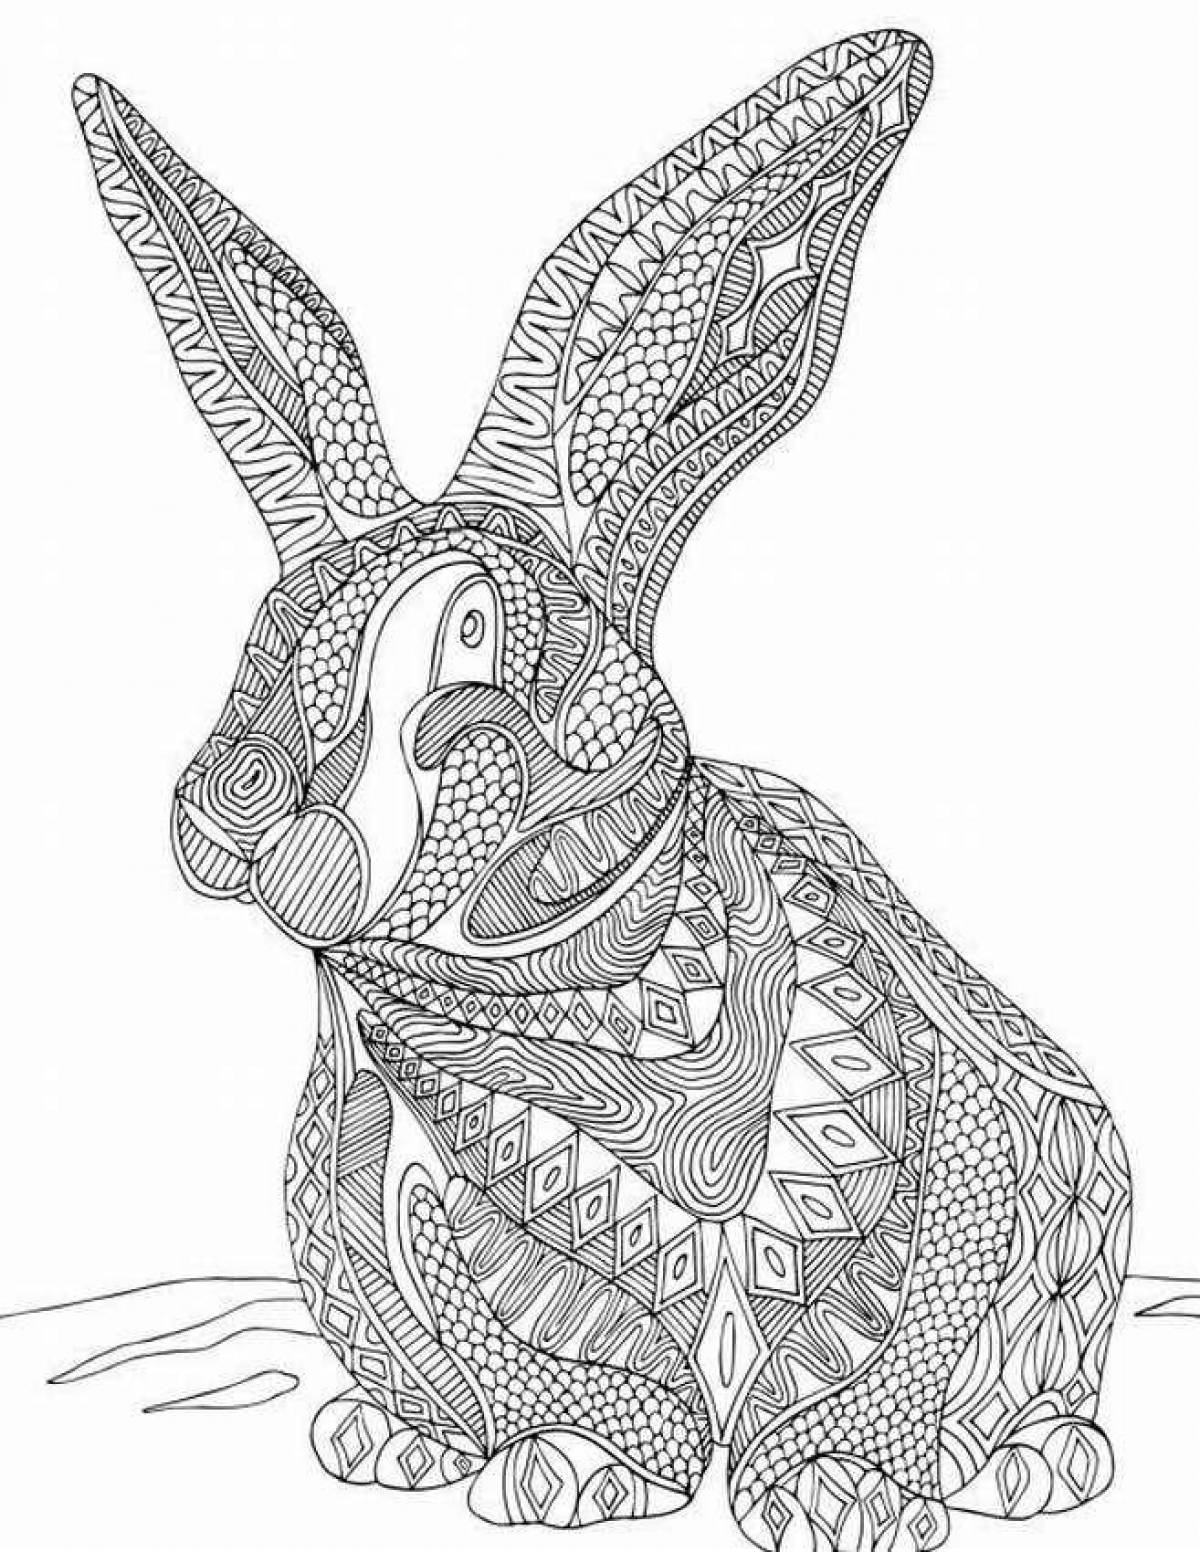 Coloring book joyful anti-stress rabbit